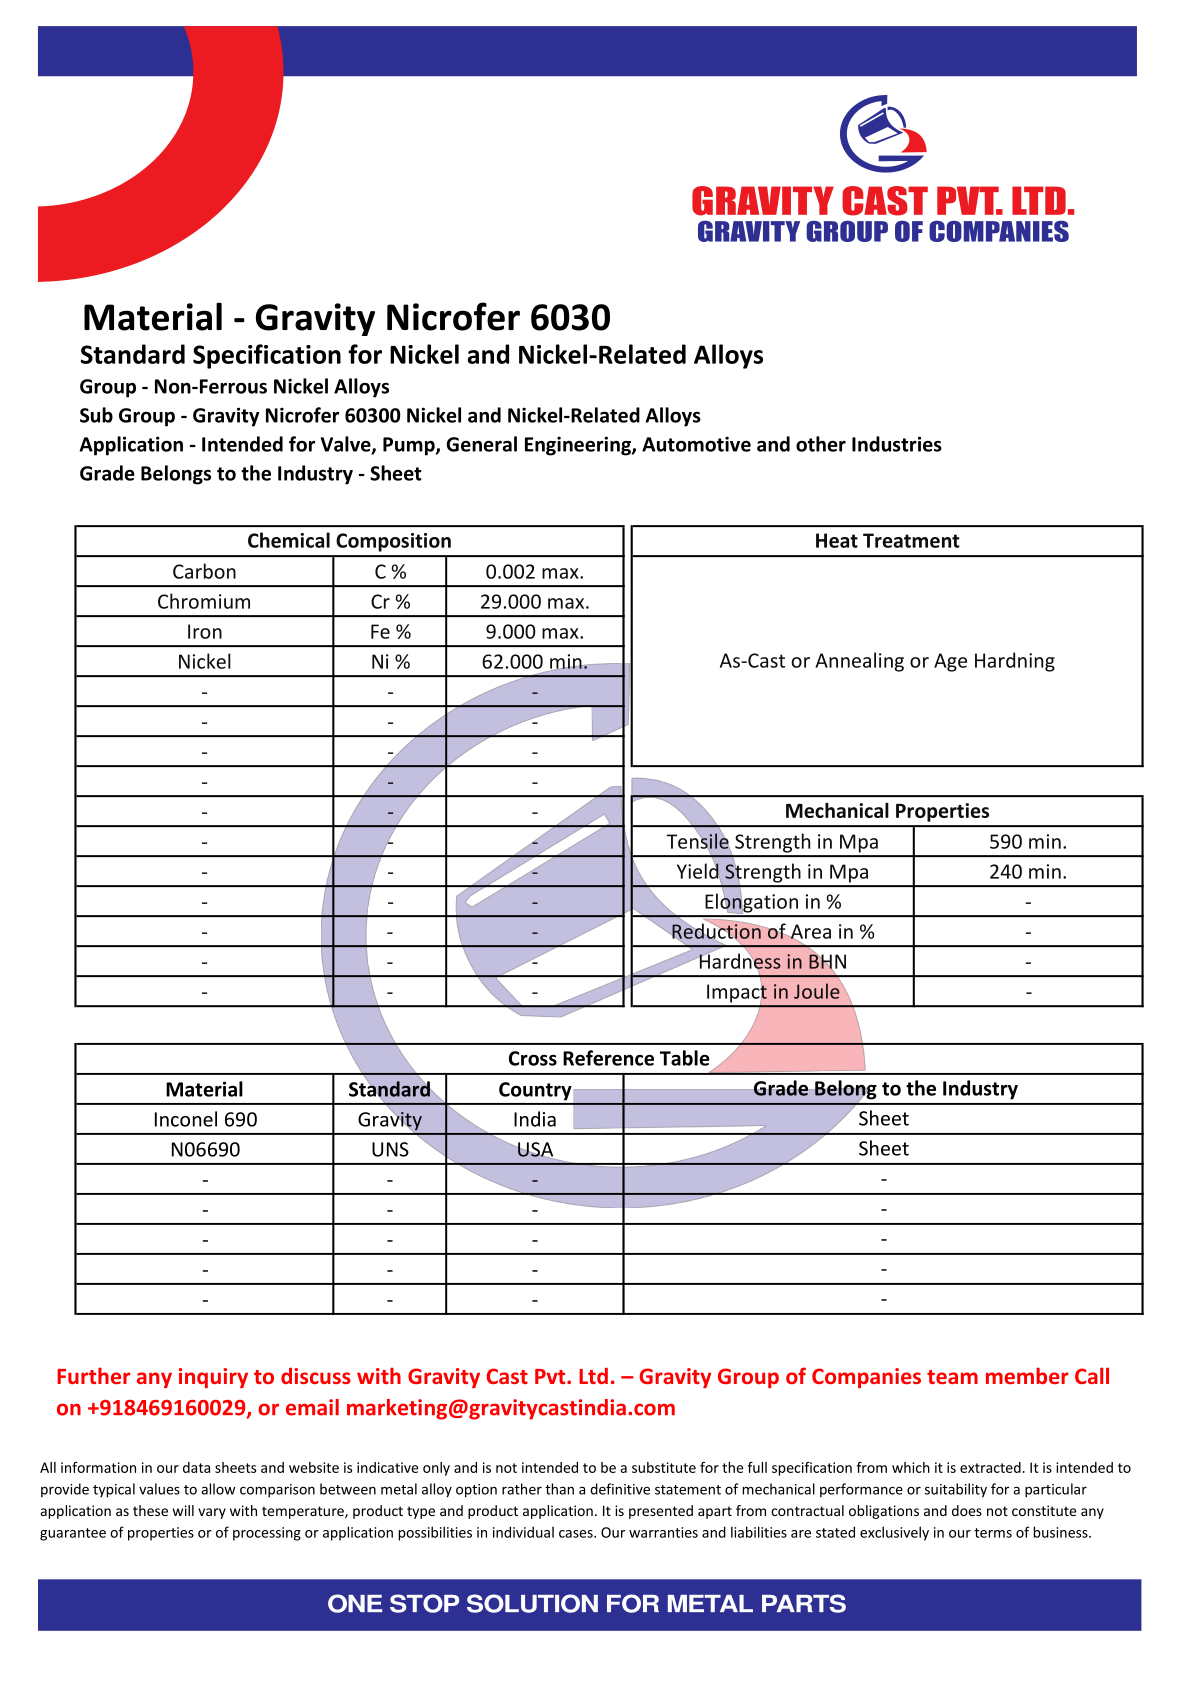 Gravity Nicrofer 6030.pdf